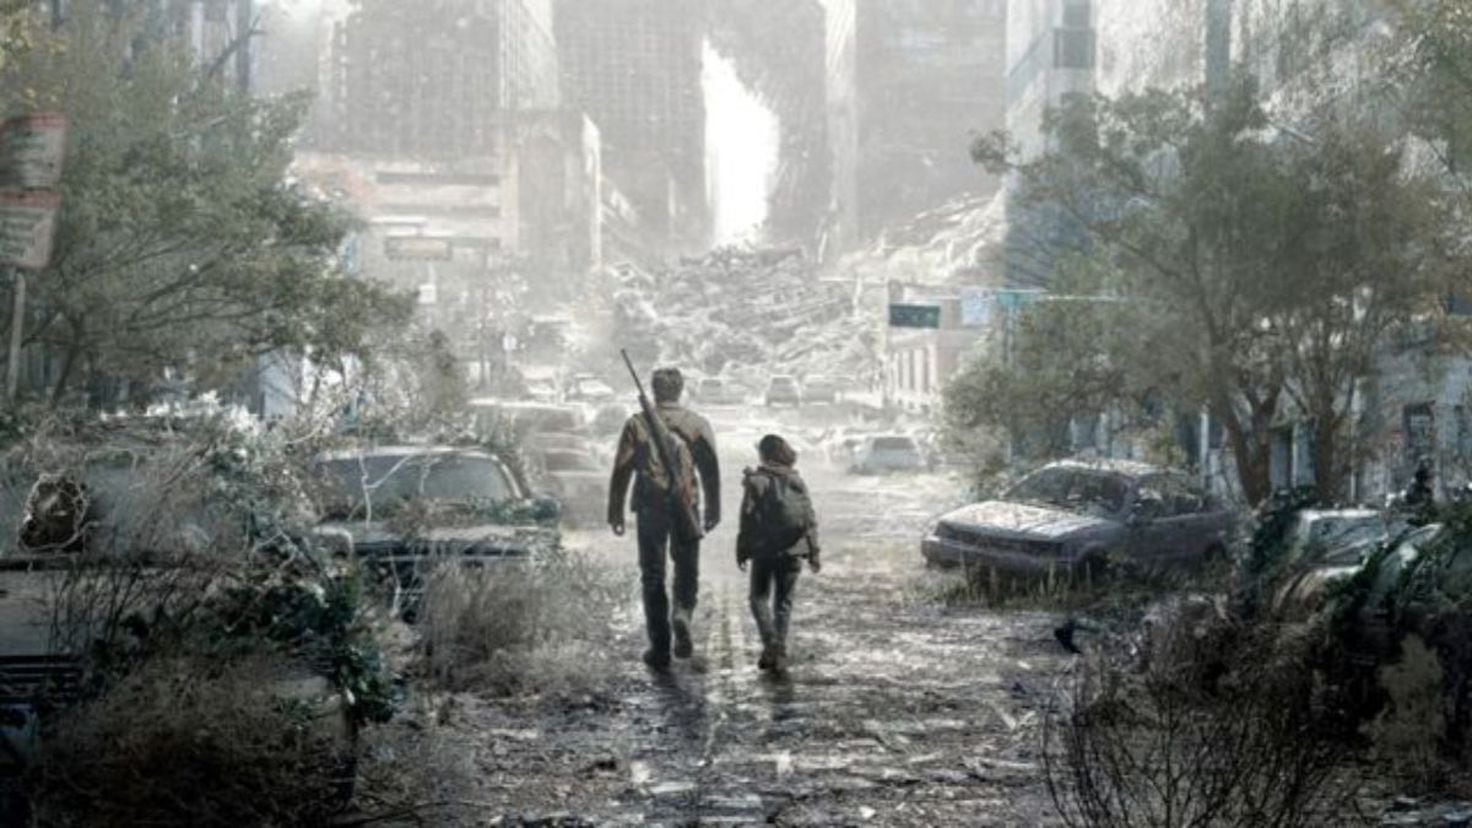 The Last Of Us show creators hint at season 2 & 3 as they adapt